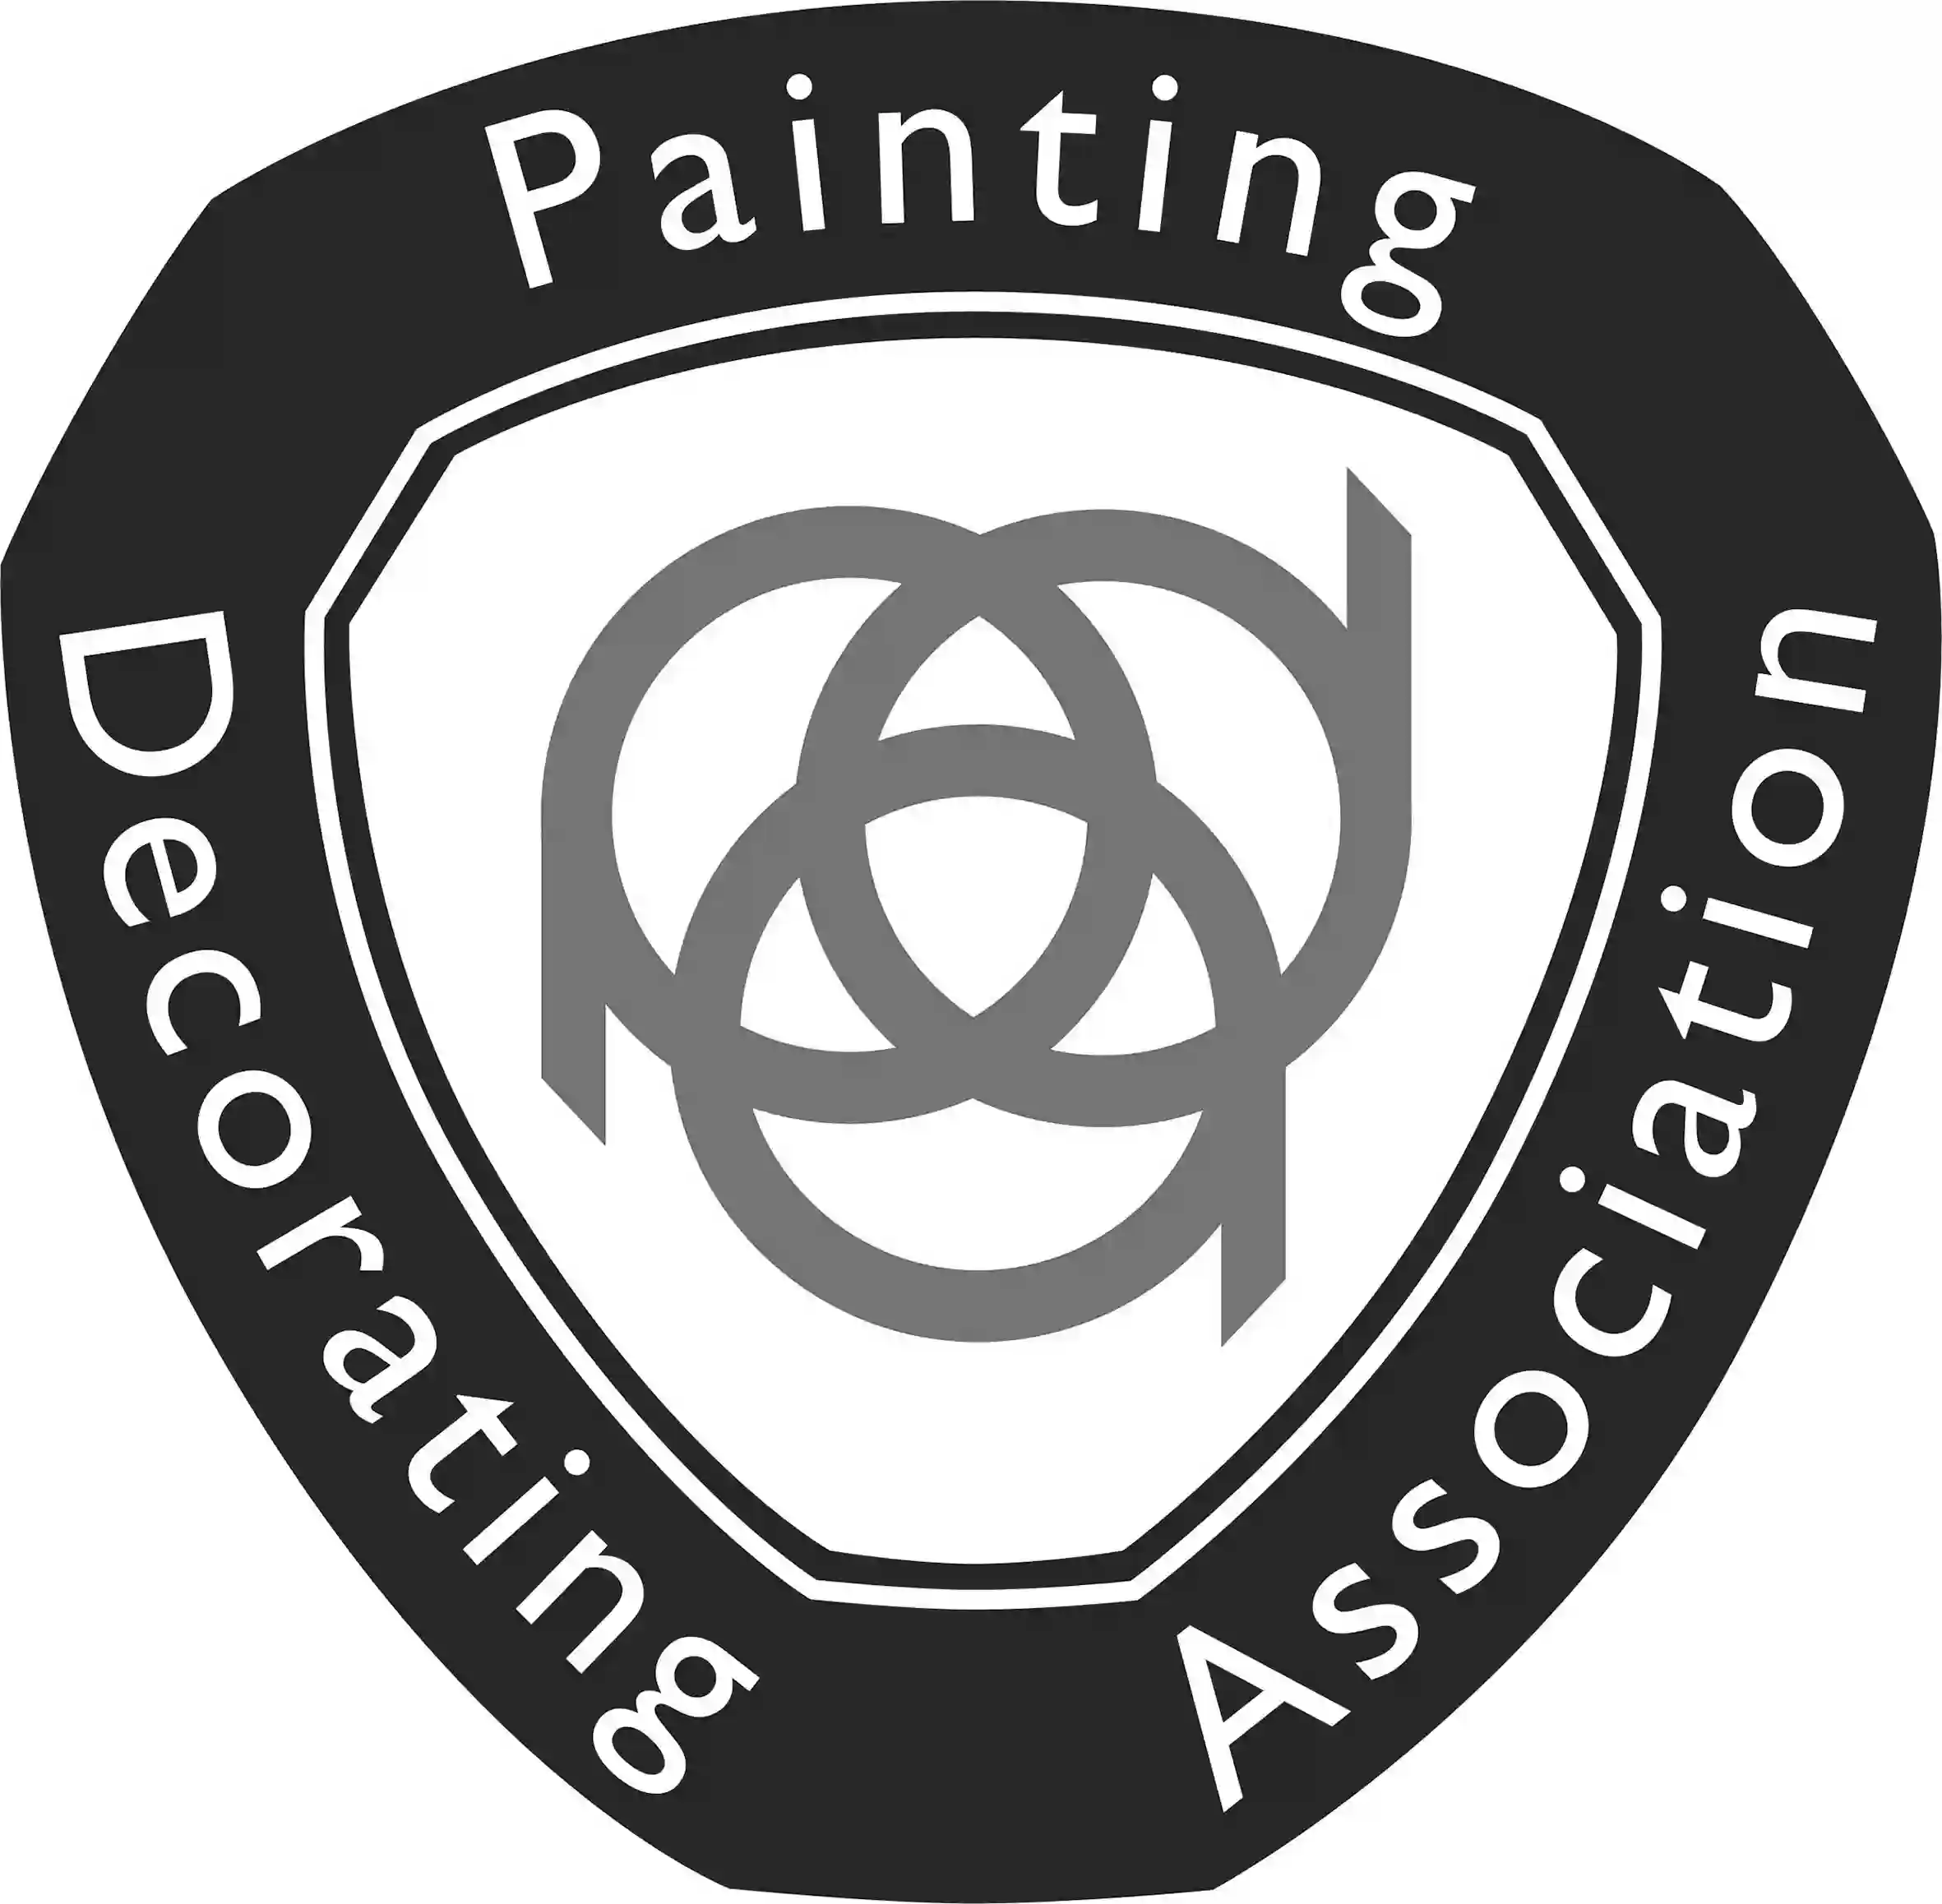 Painting & Decorating Association | Accreditations